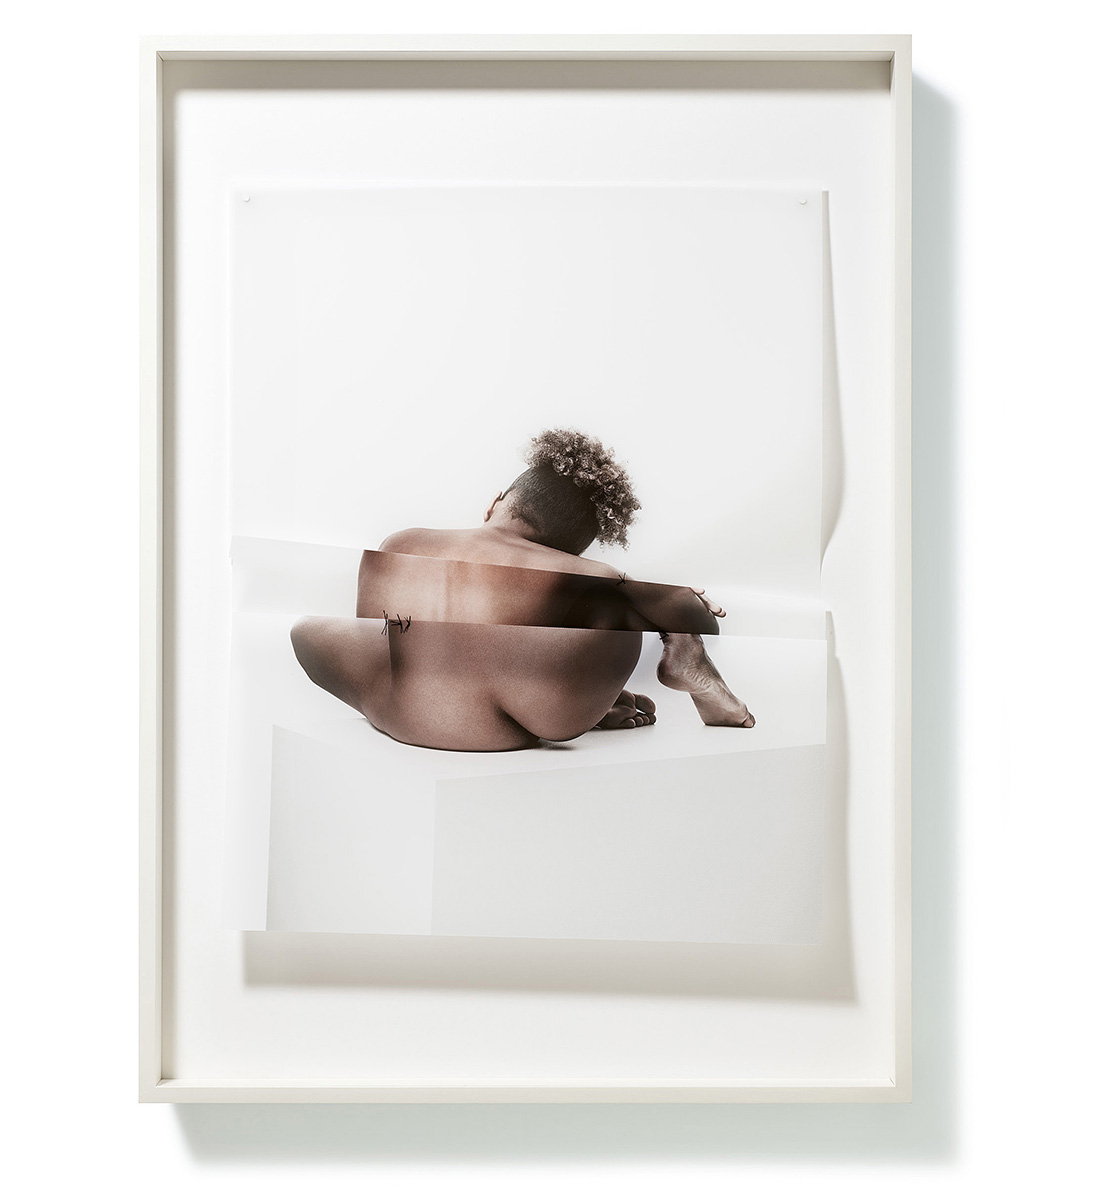 Zur Figur 08, 202090 x 70 x 7,5 cmPhotography, pigment print on transparent paper, sewed; framed